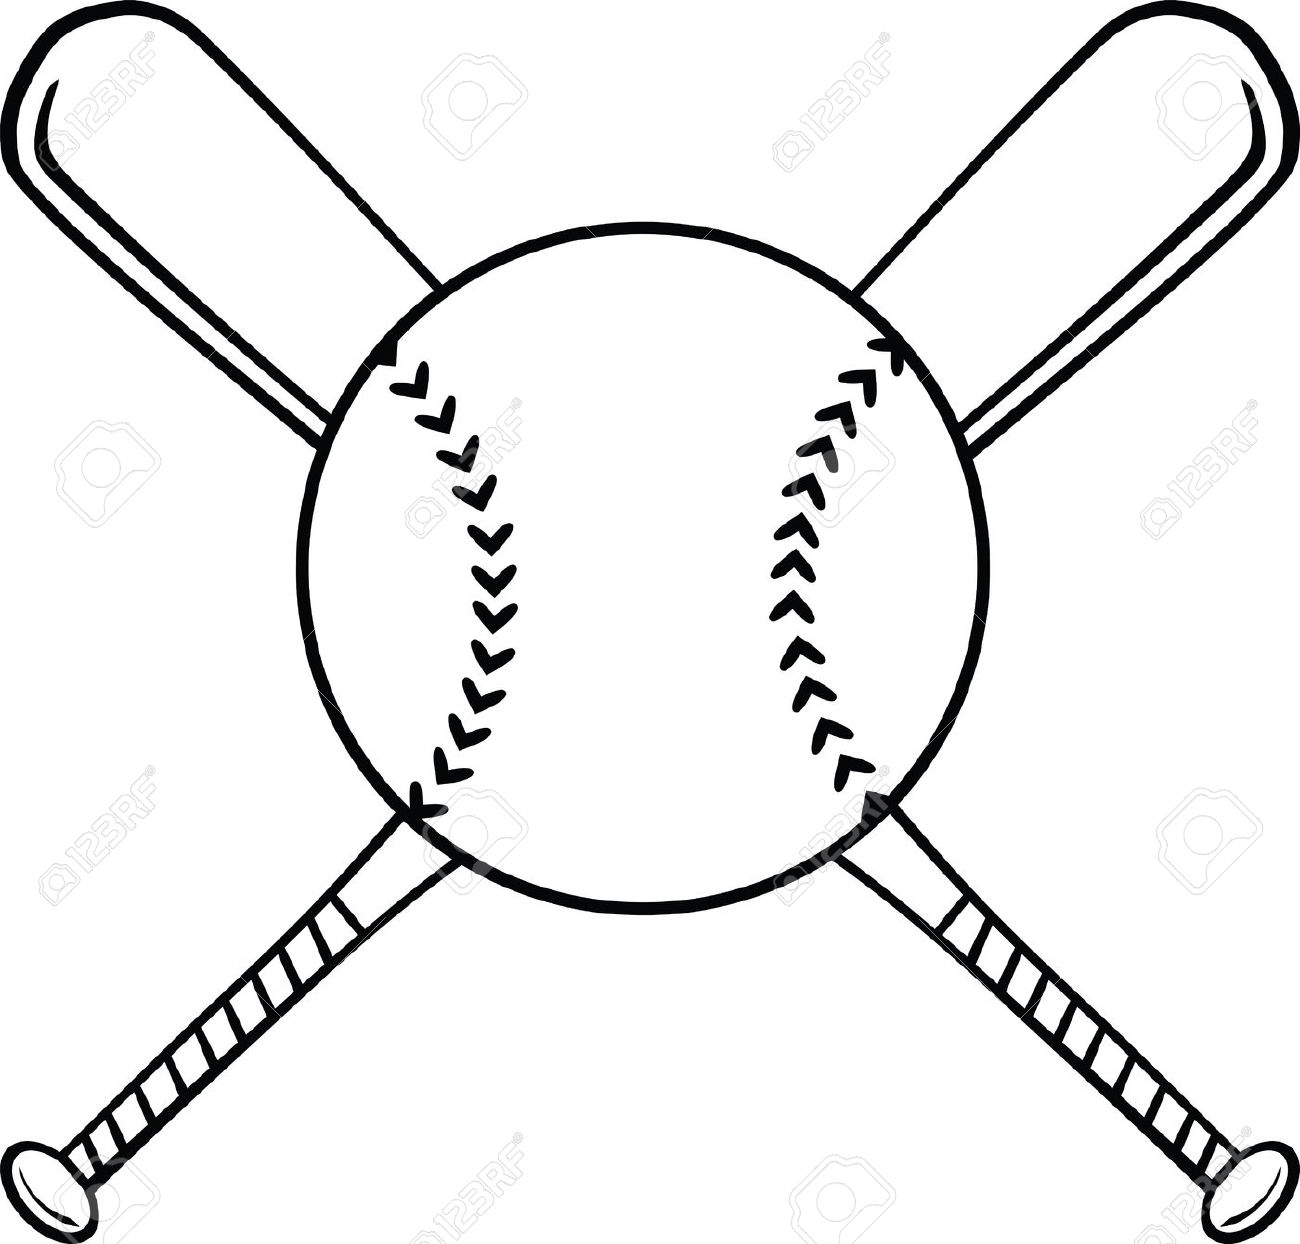 Black and white baseball clip